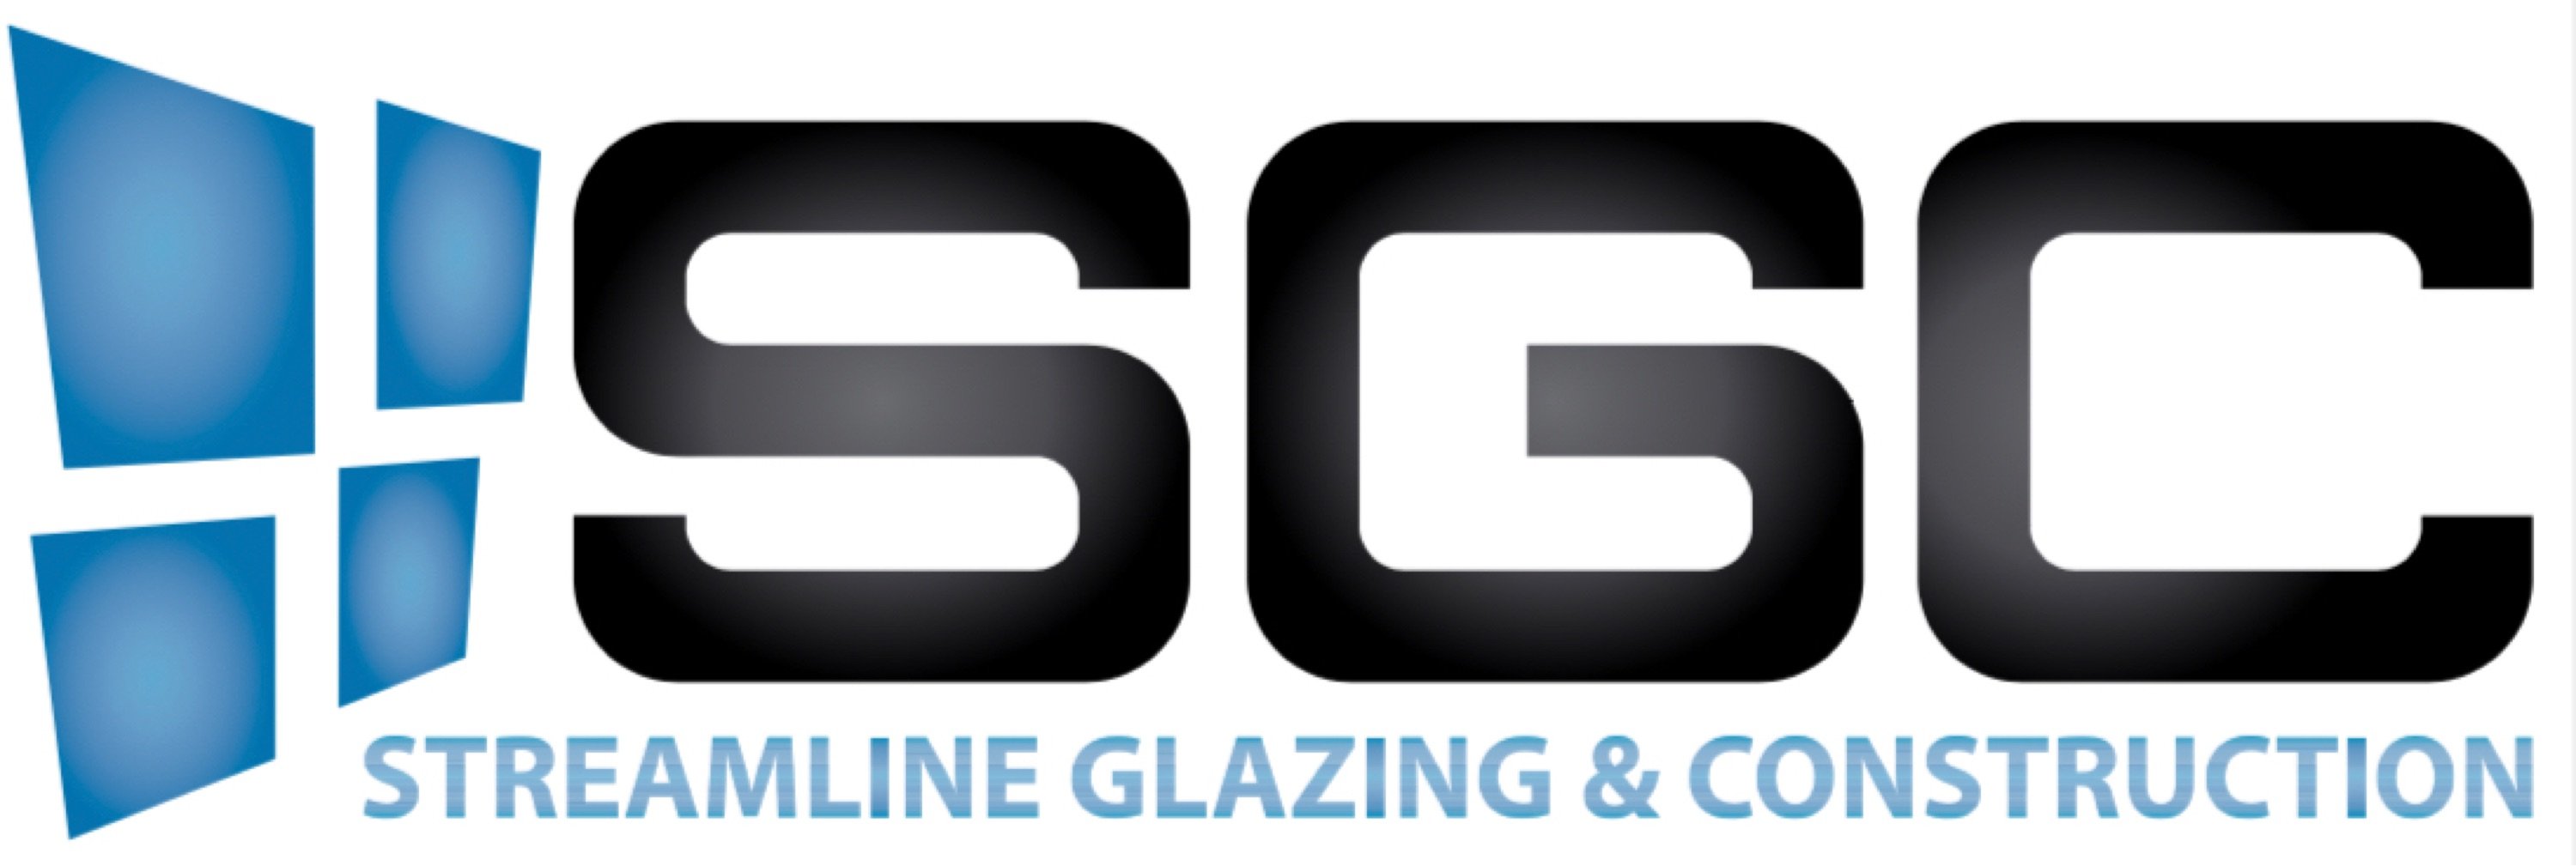 Streamline Glazing and Construction Logo